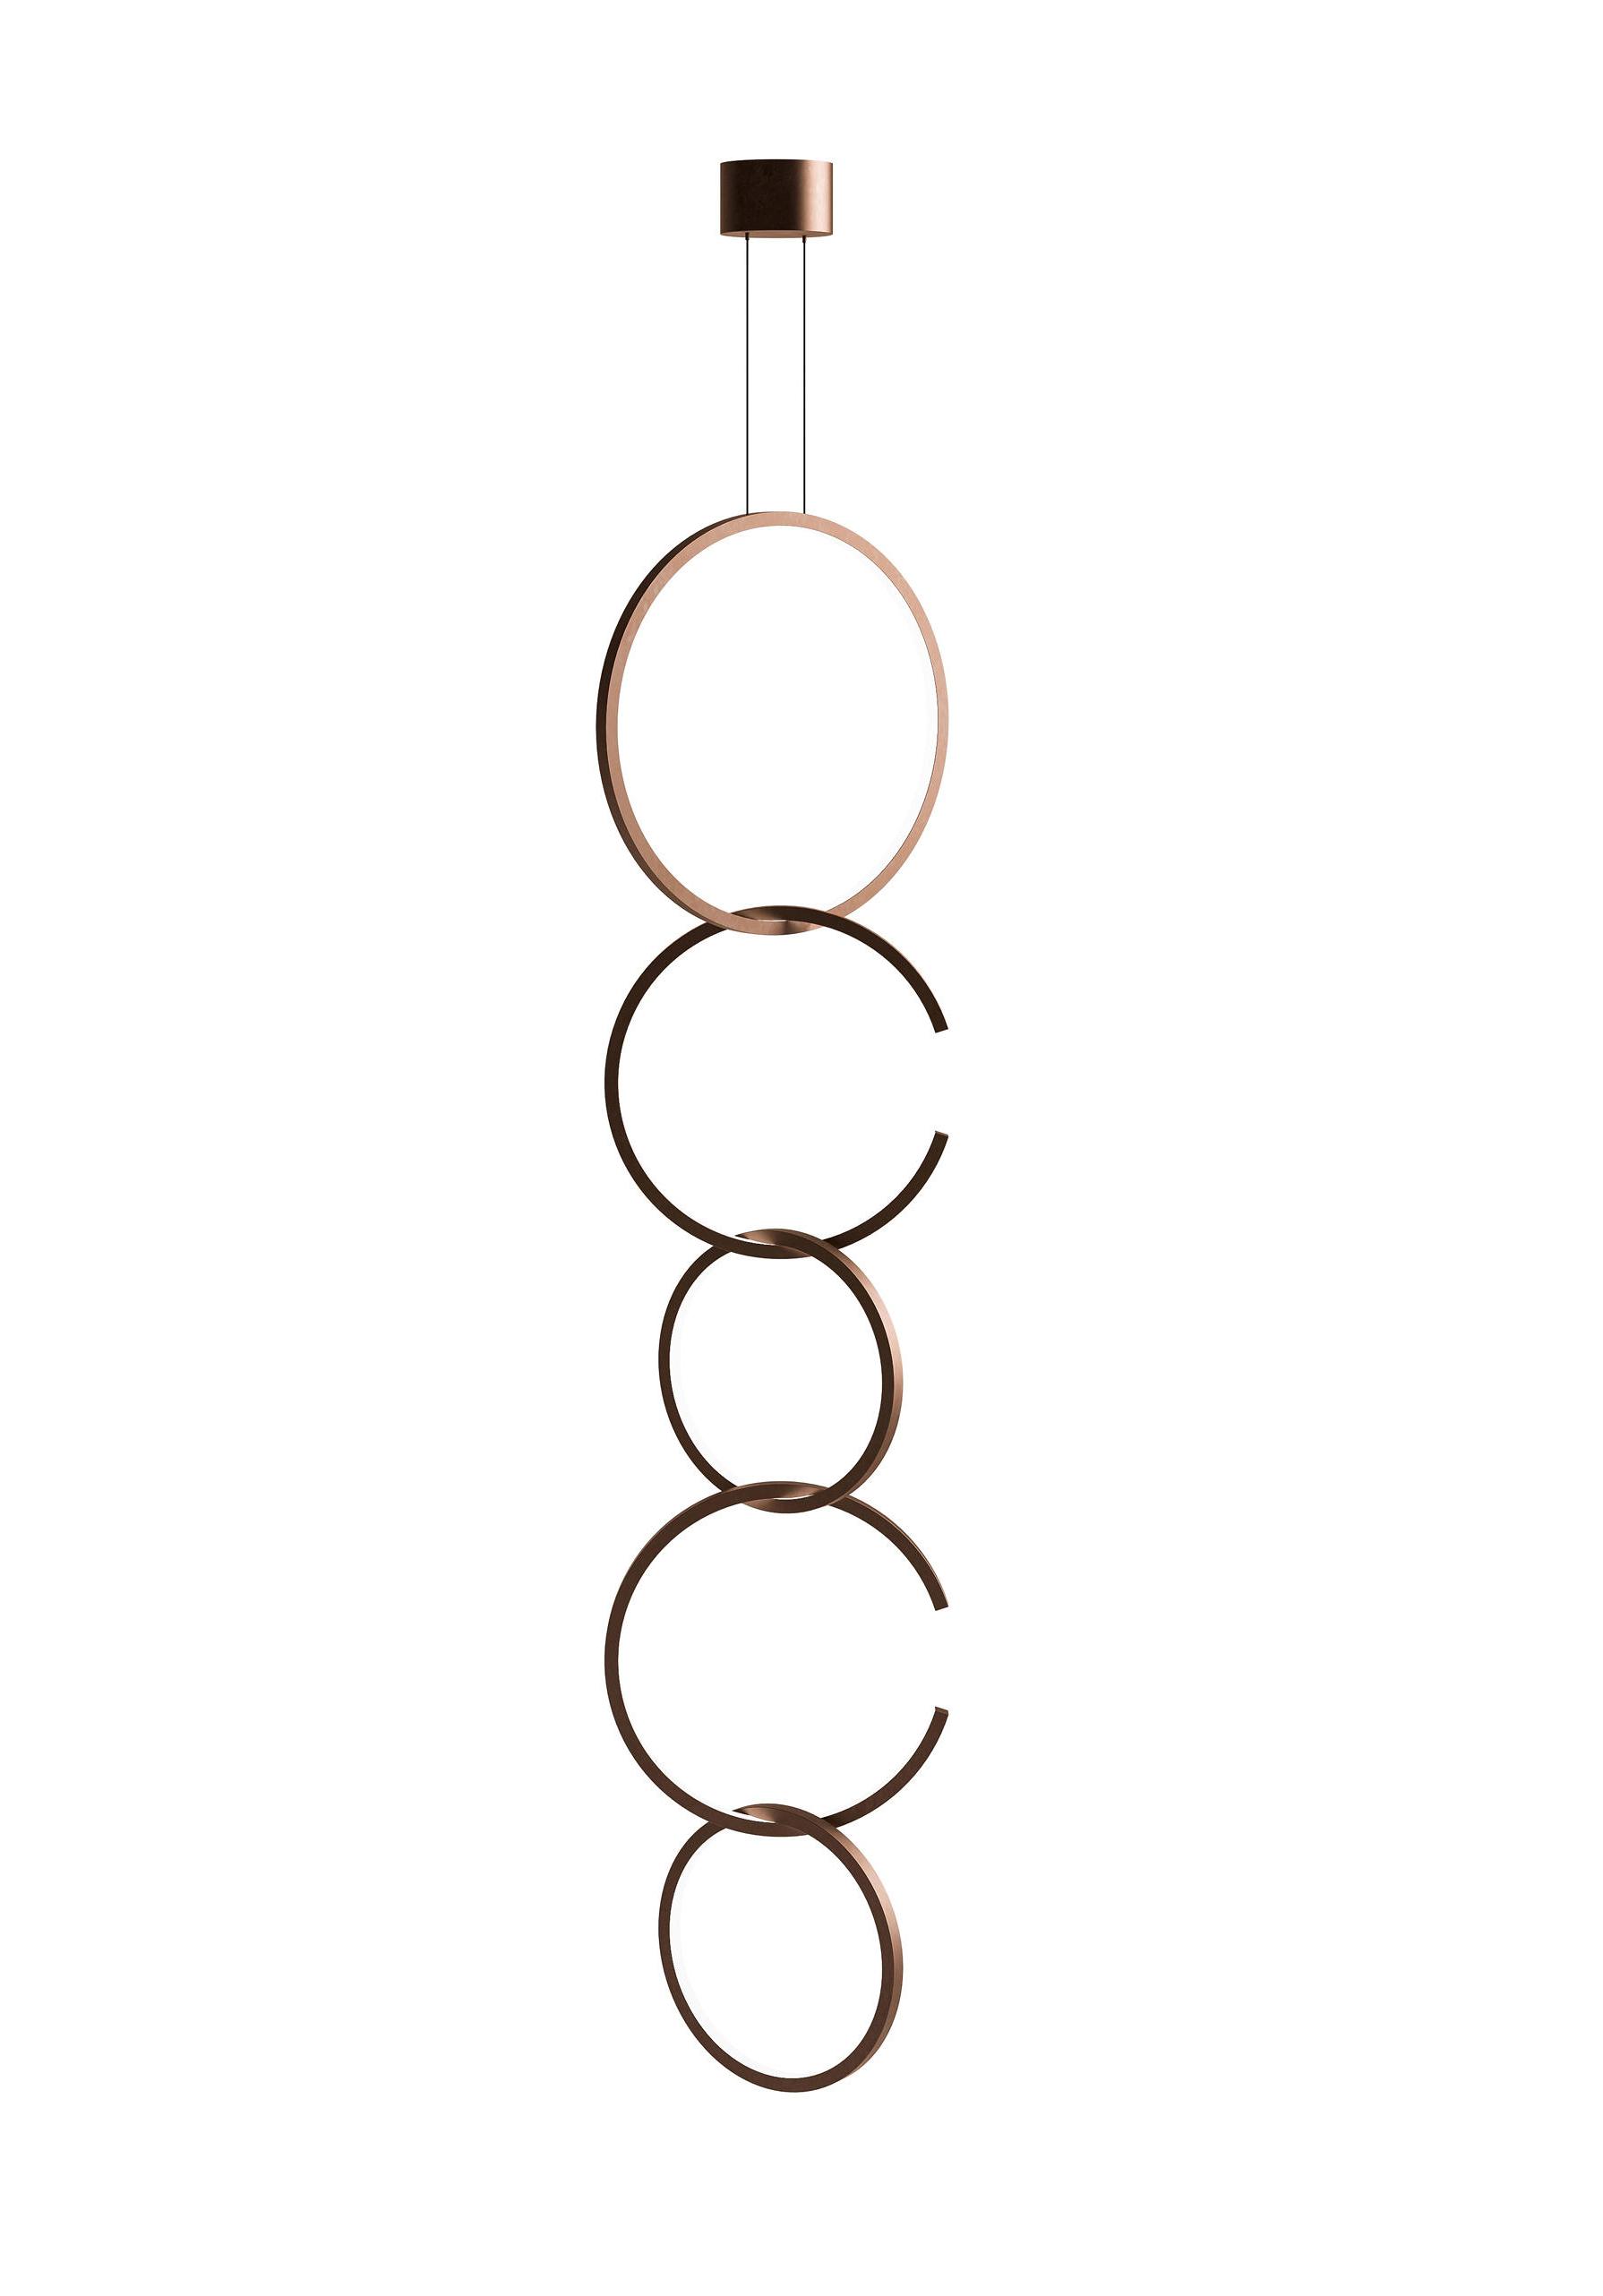 Vertical Rings Pendant Lamp Italy